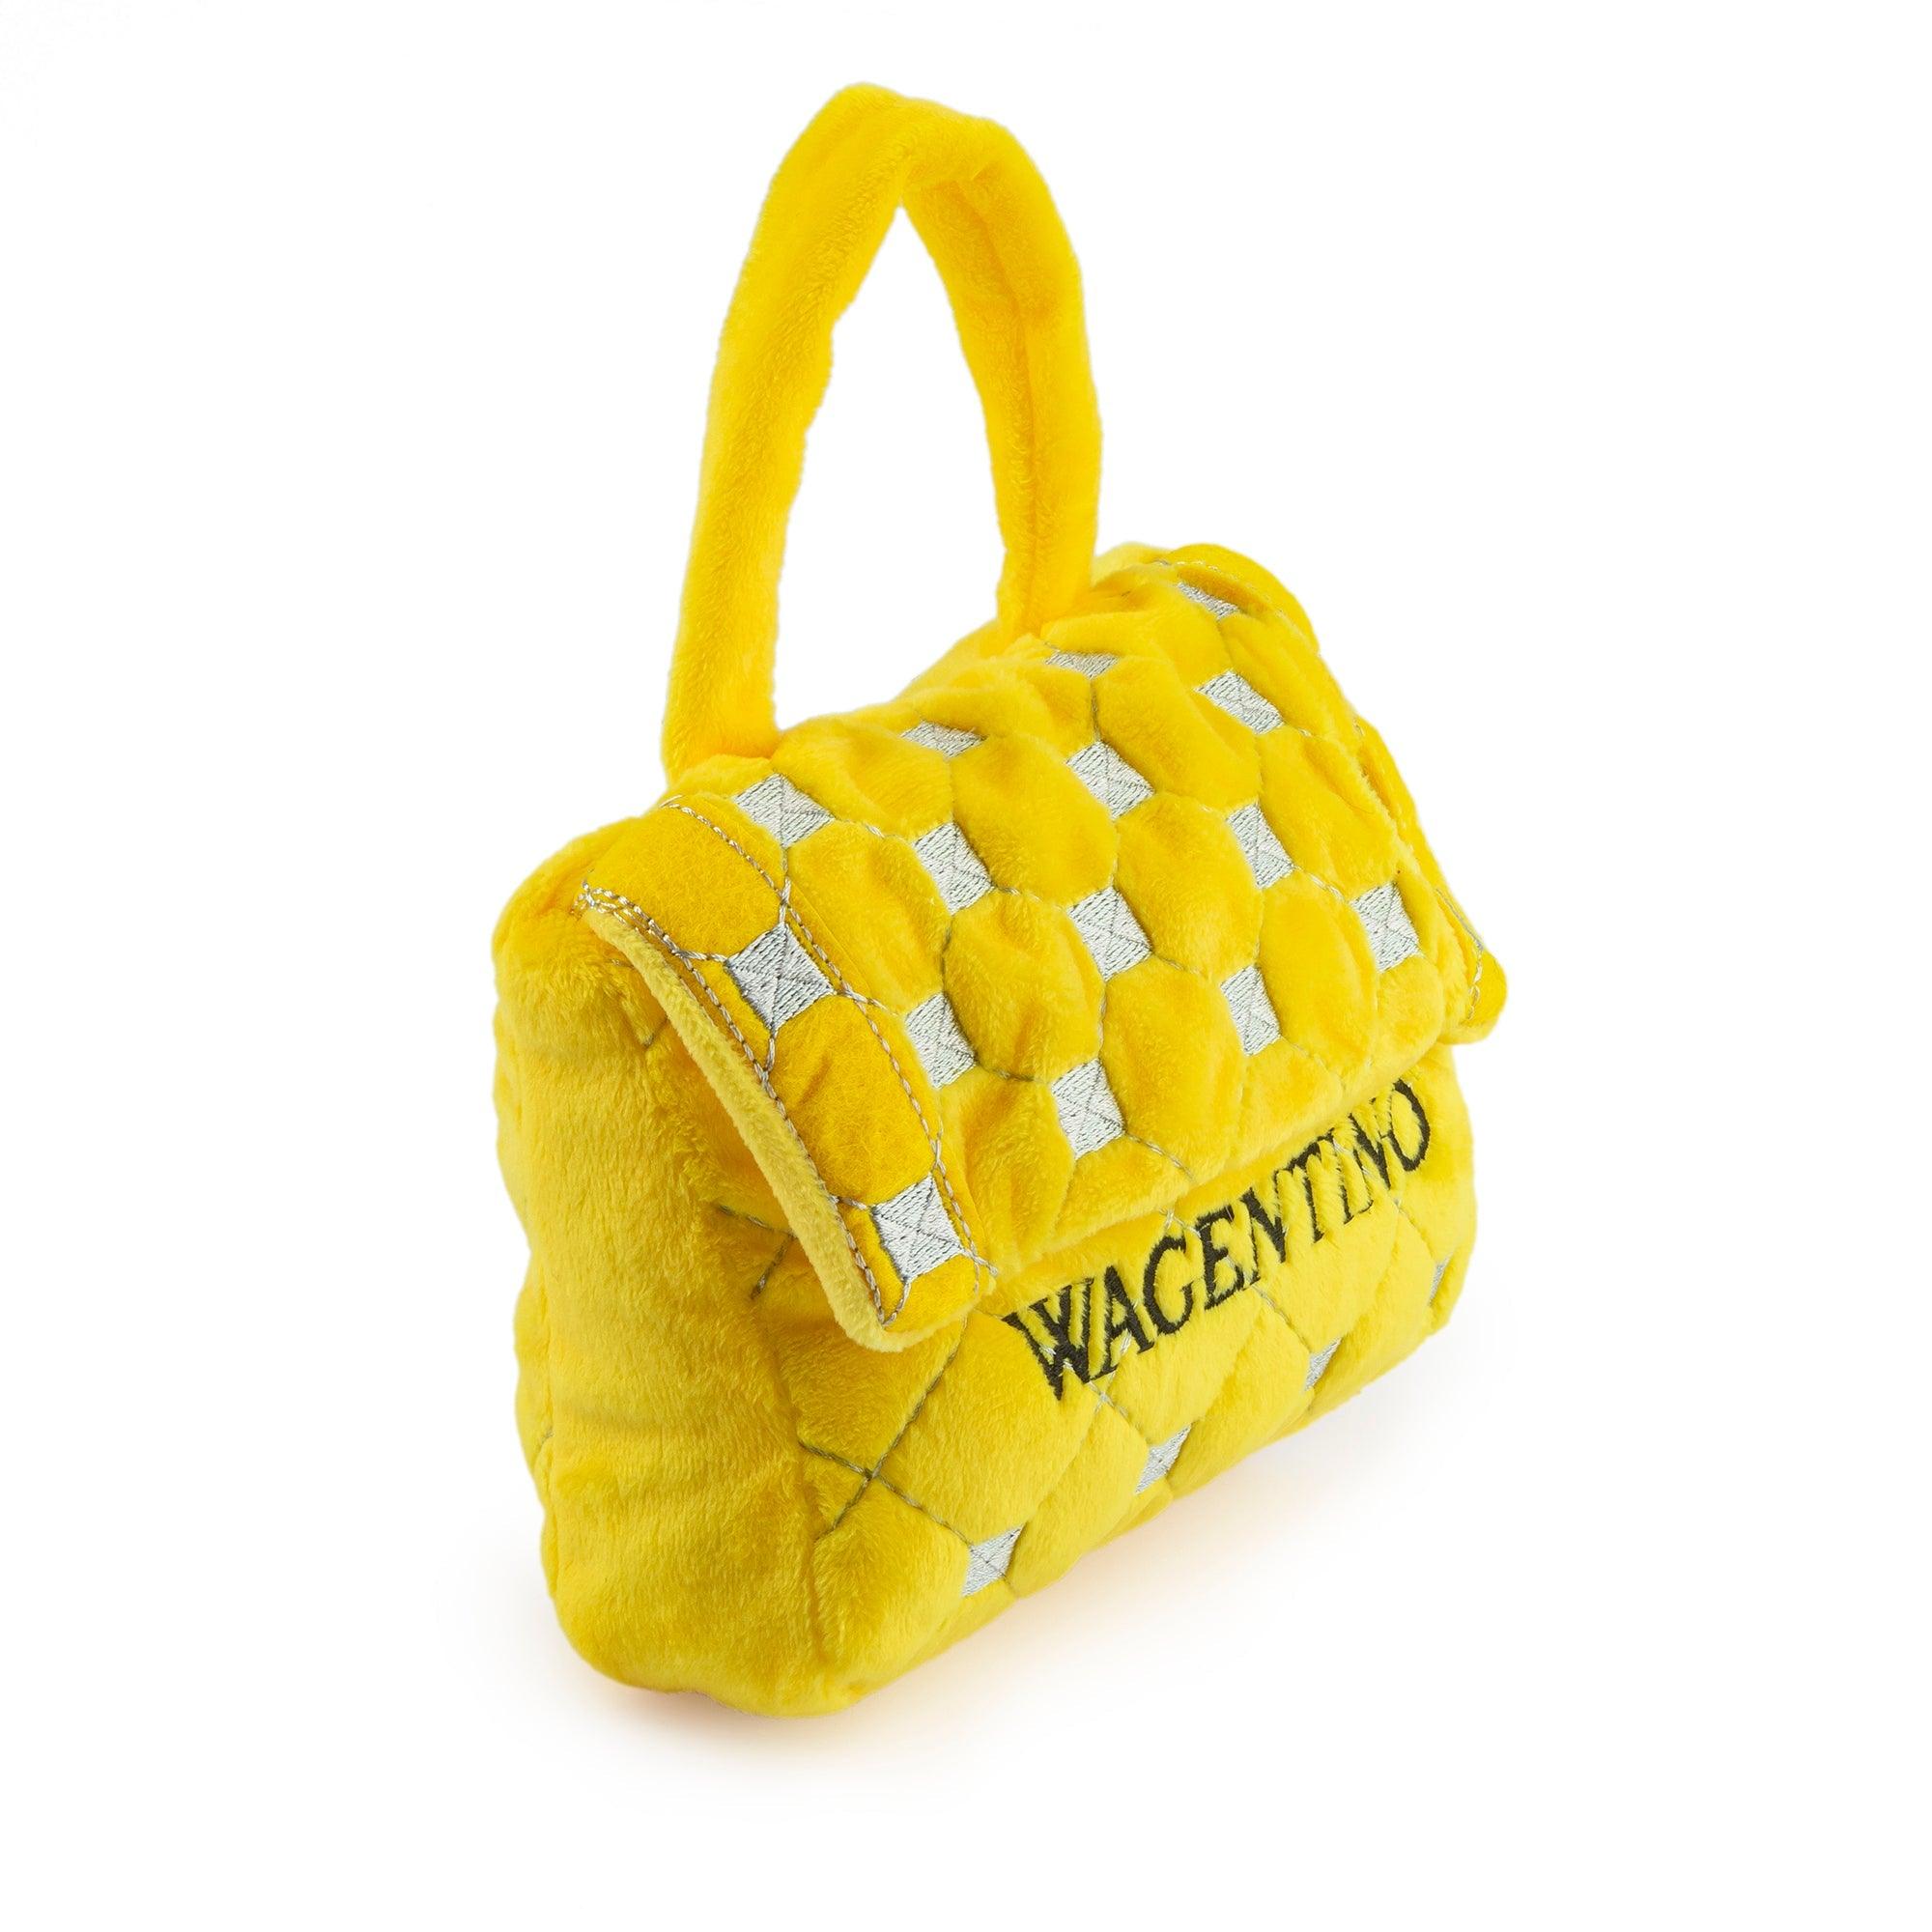 Wagentino Handbag - Rocky & Maggie's Pet Boutique and Salon